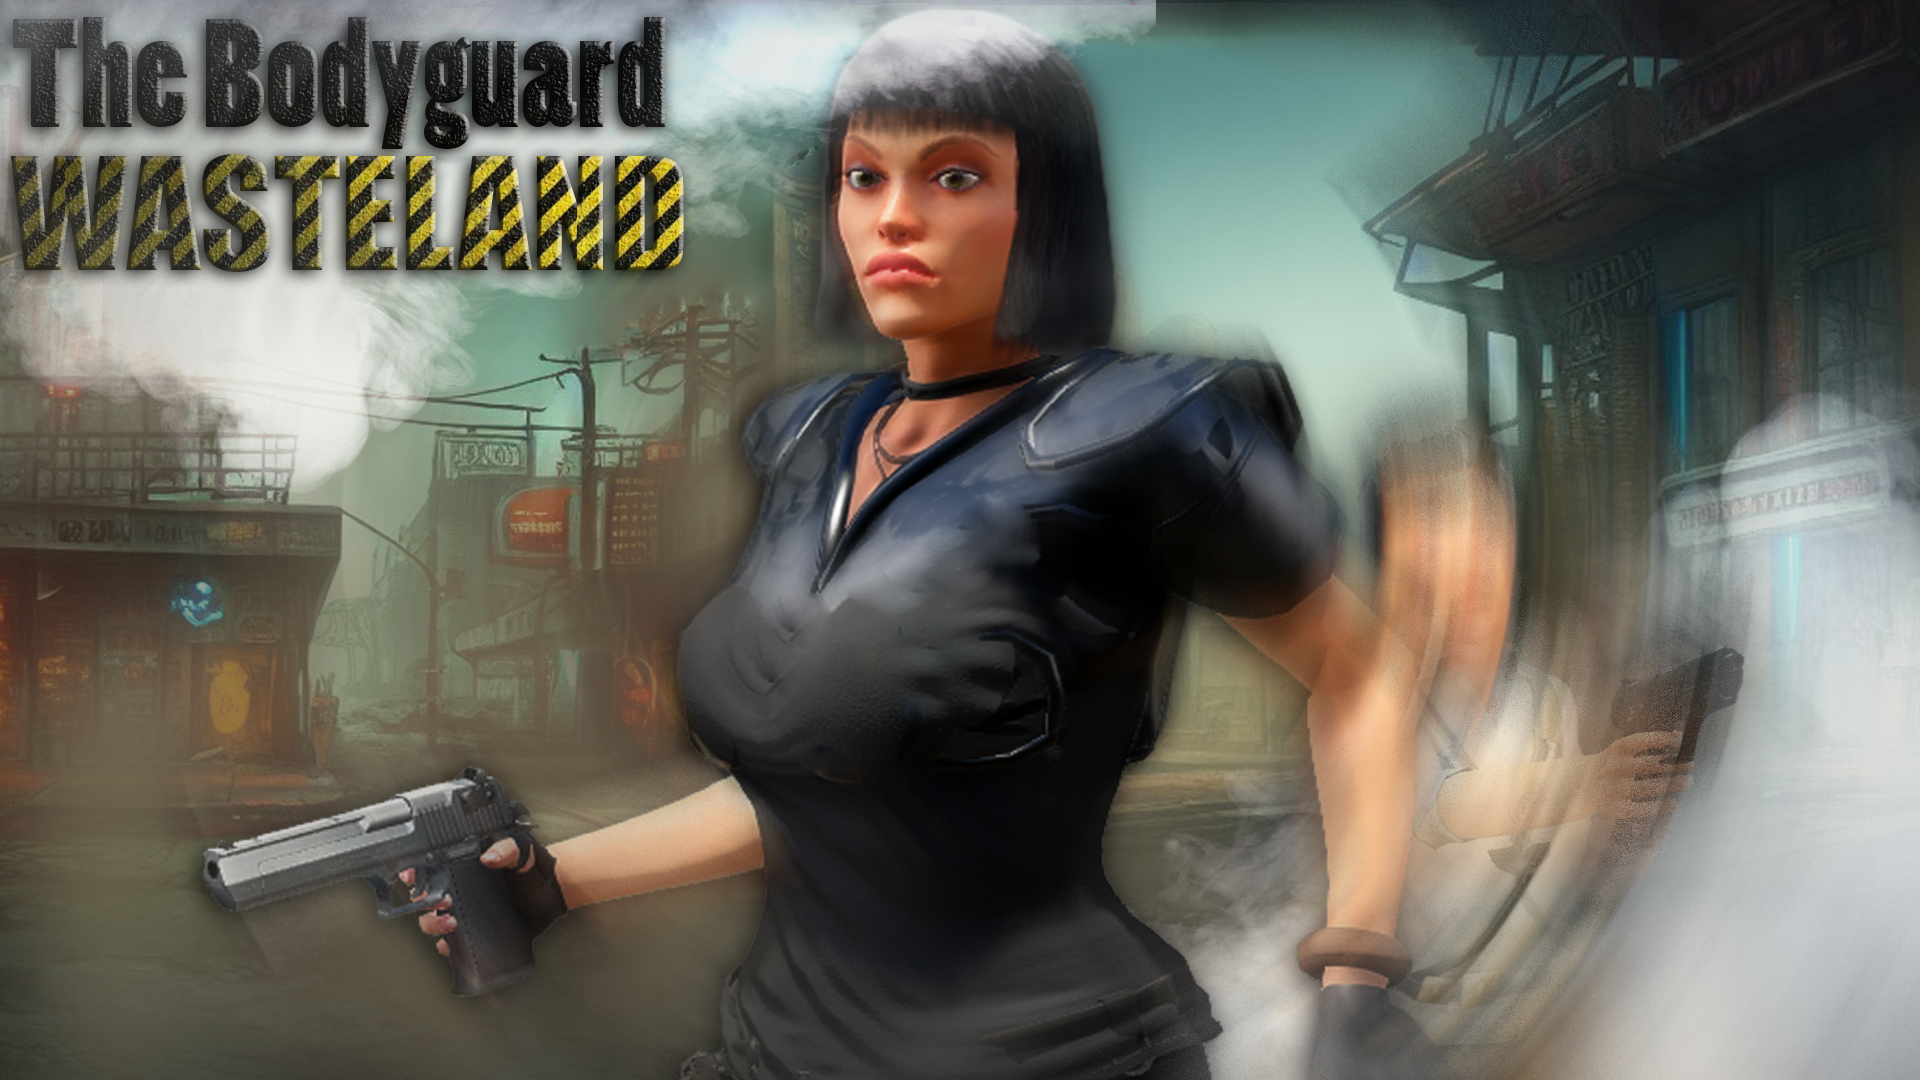 The Bodyguard - Wasteland - Free Version